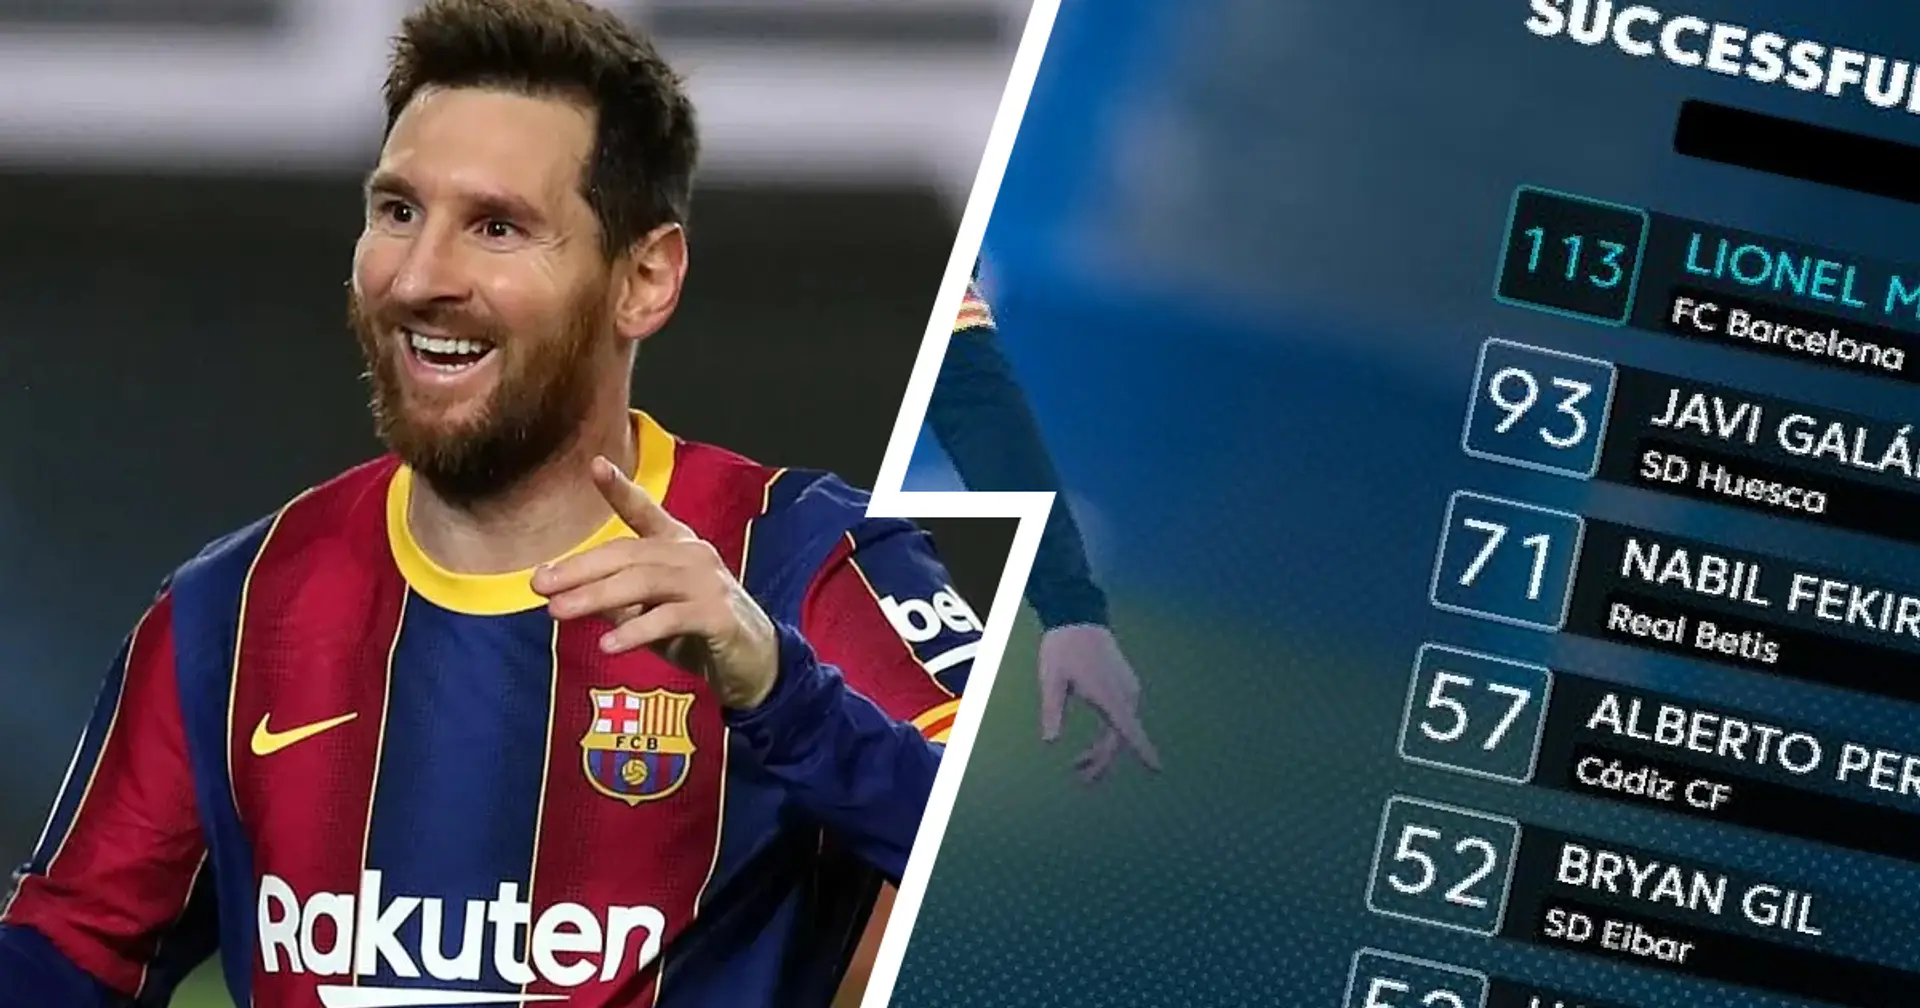 Lionel Messi tops La Liga for most successful dribbles this season